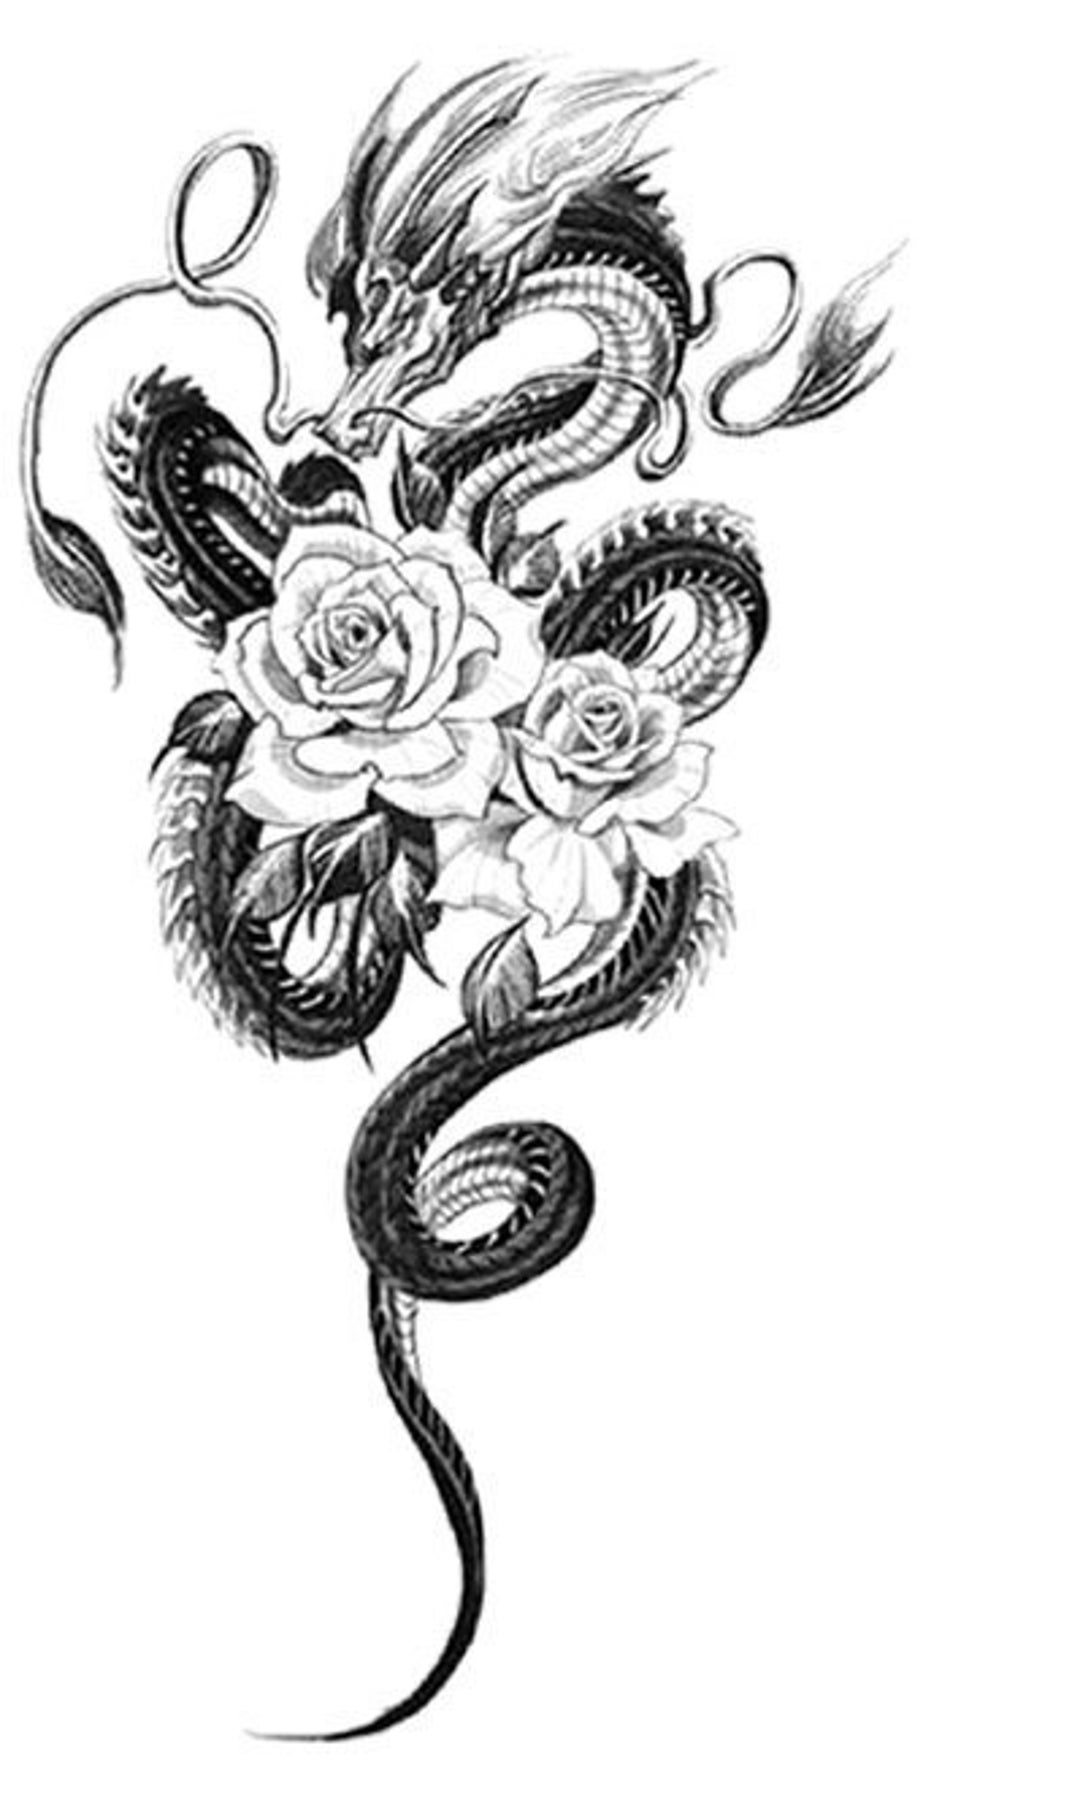 Ramón on Twitter Harusisun gt Dragon amp Roses tattoo ink art  httpstcoB7jLq2Qybu  Twitter